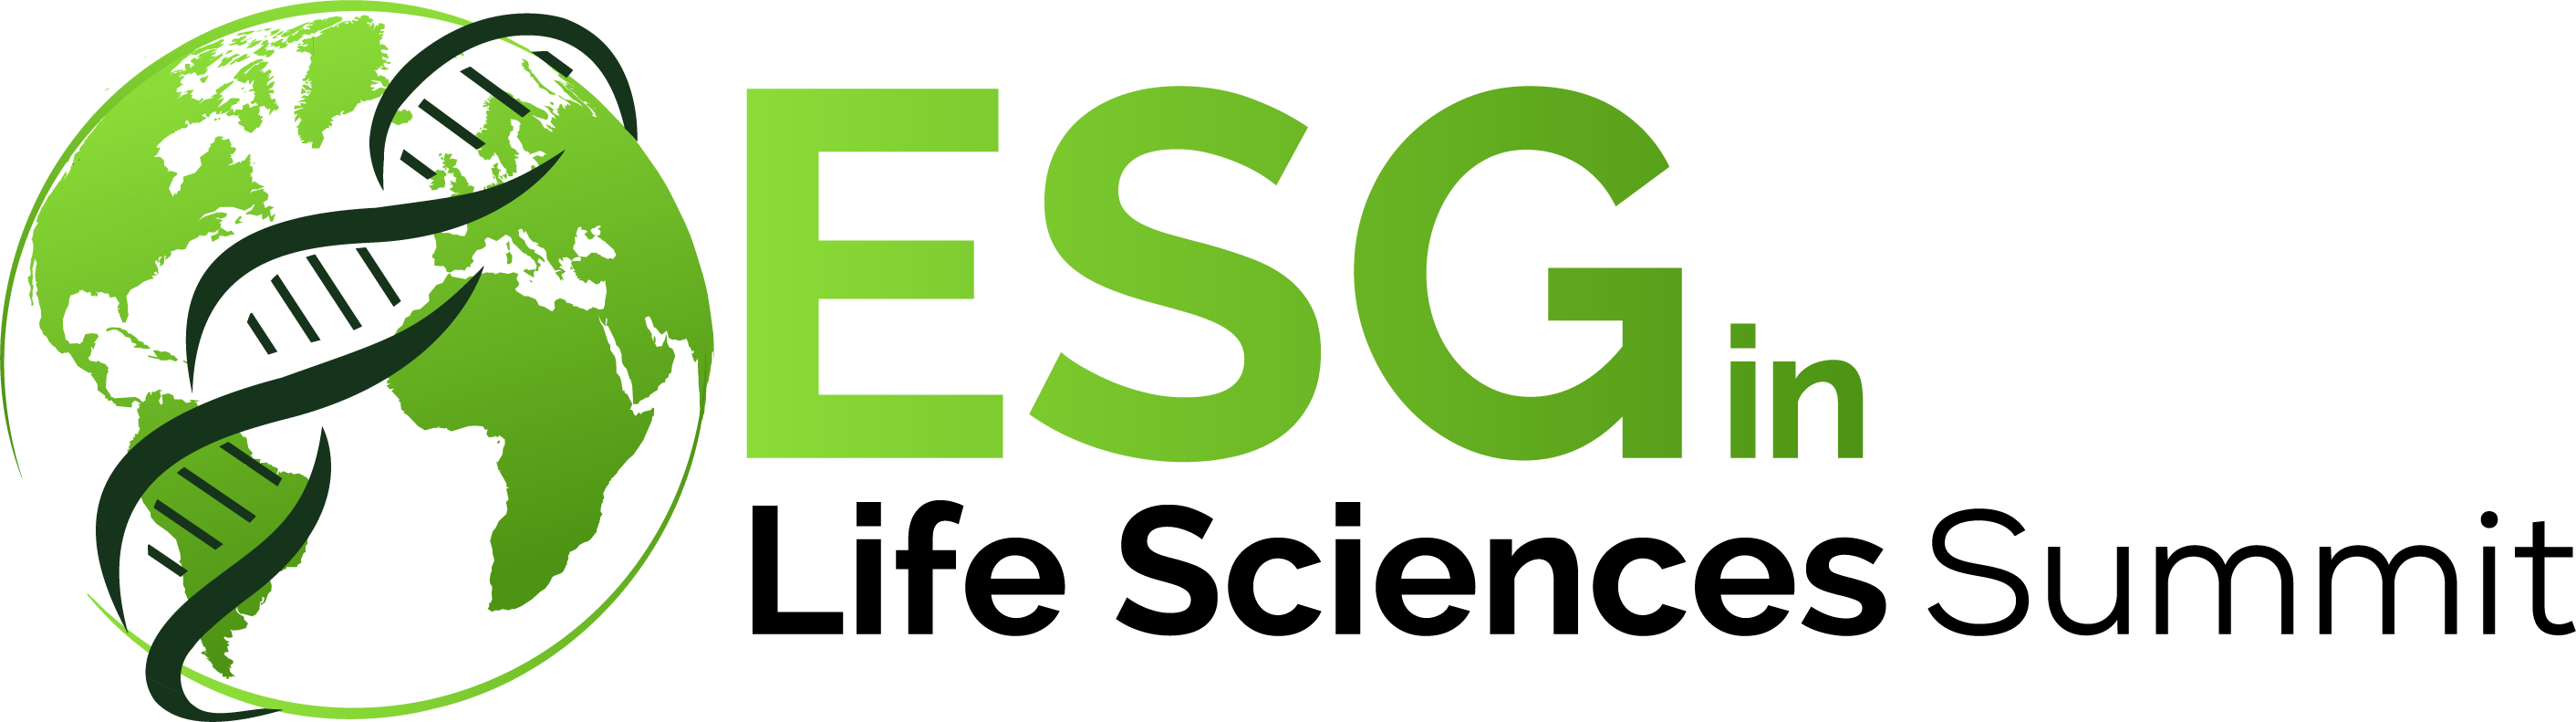 ESG in Life Sciences Summit logo